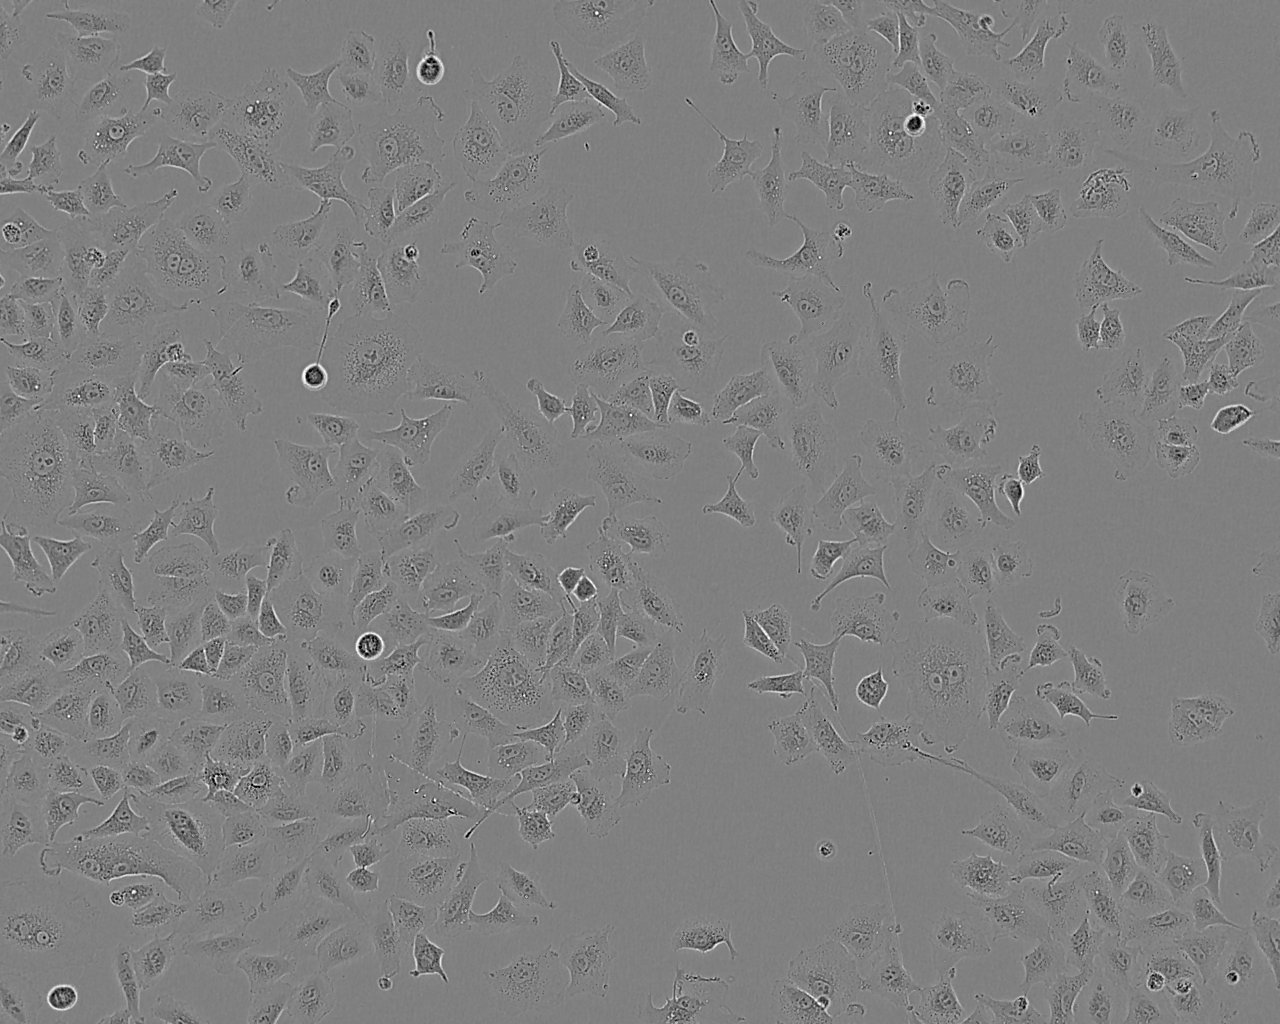 WPMY-1:人正常前列腺基质永生化复苏细胞(提供STR鉴定图谱)